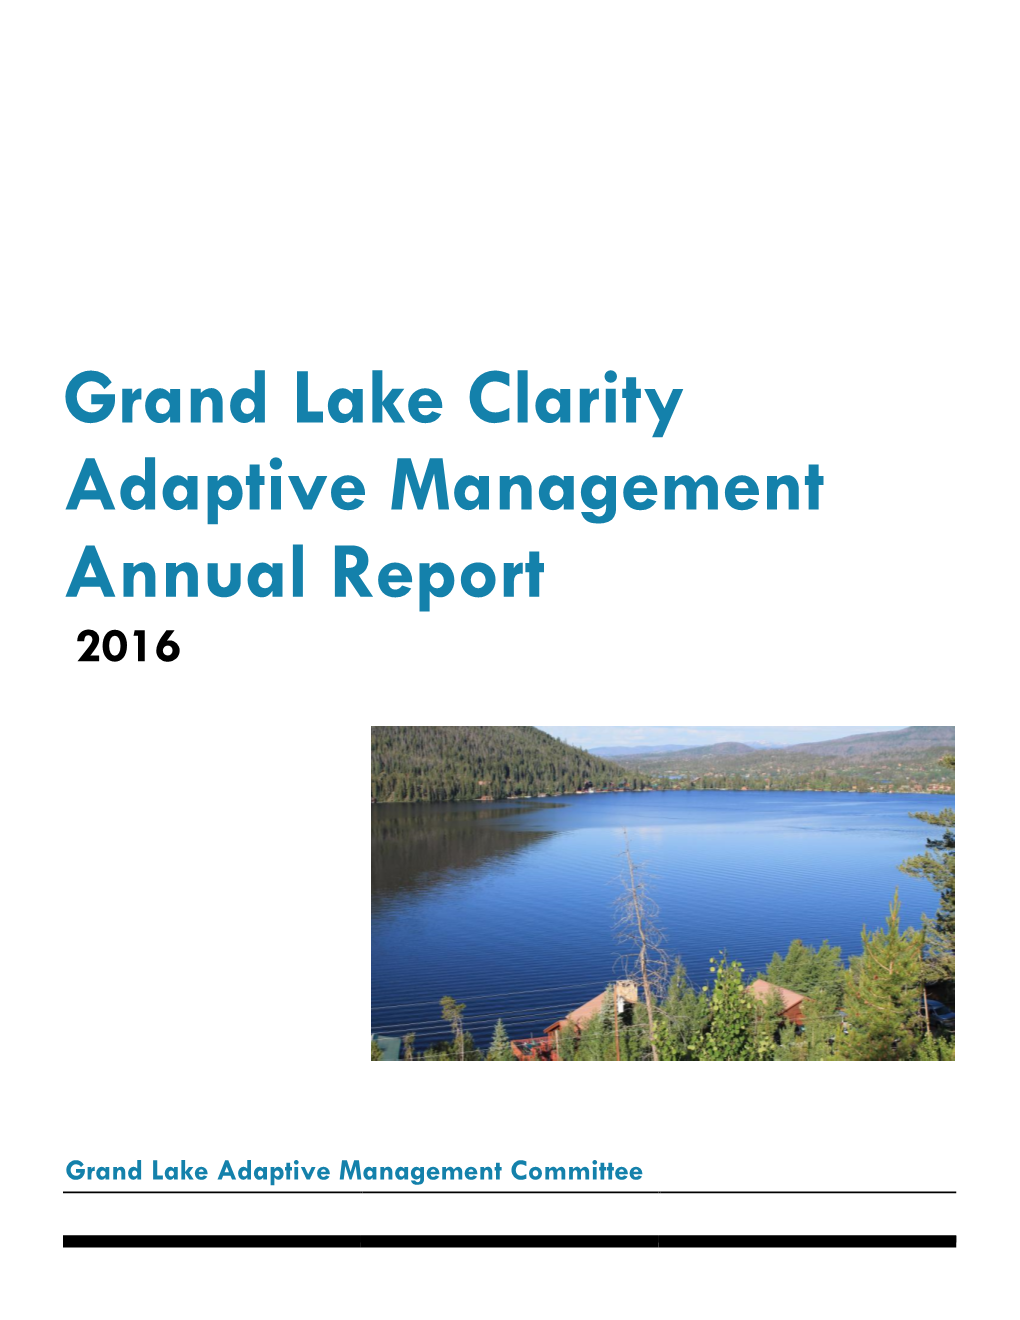 Grand Lake Clarity Adaptive Management Annual Report 2016